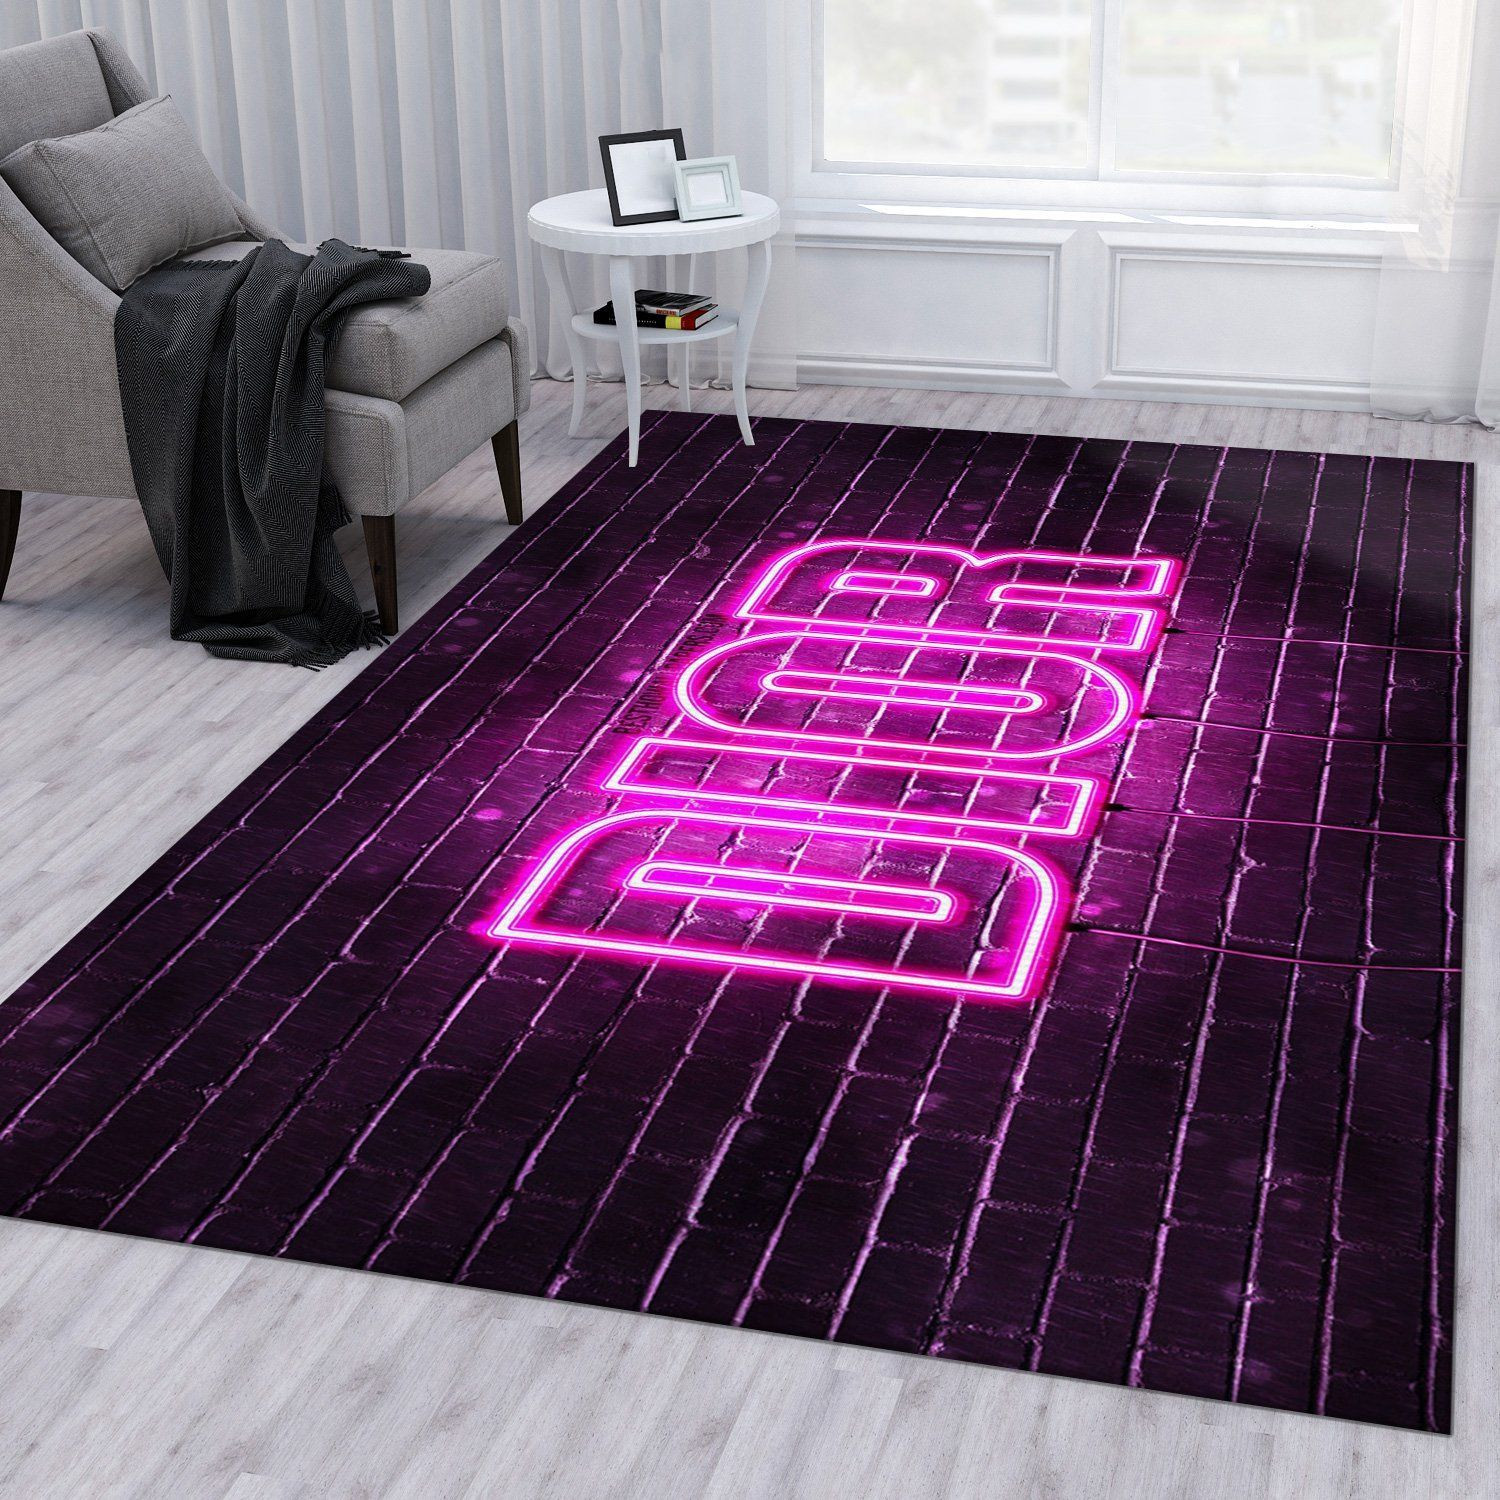 Dior Luxury Fashion Brand Rug Home Decor Area Carpet Door Mat